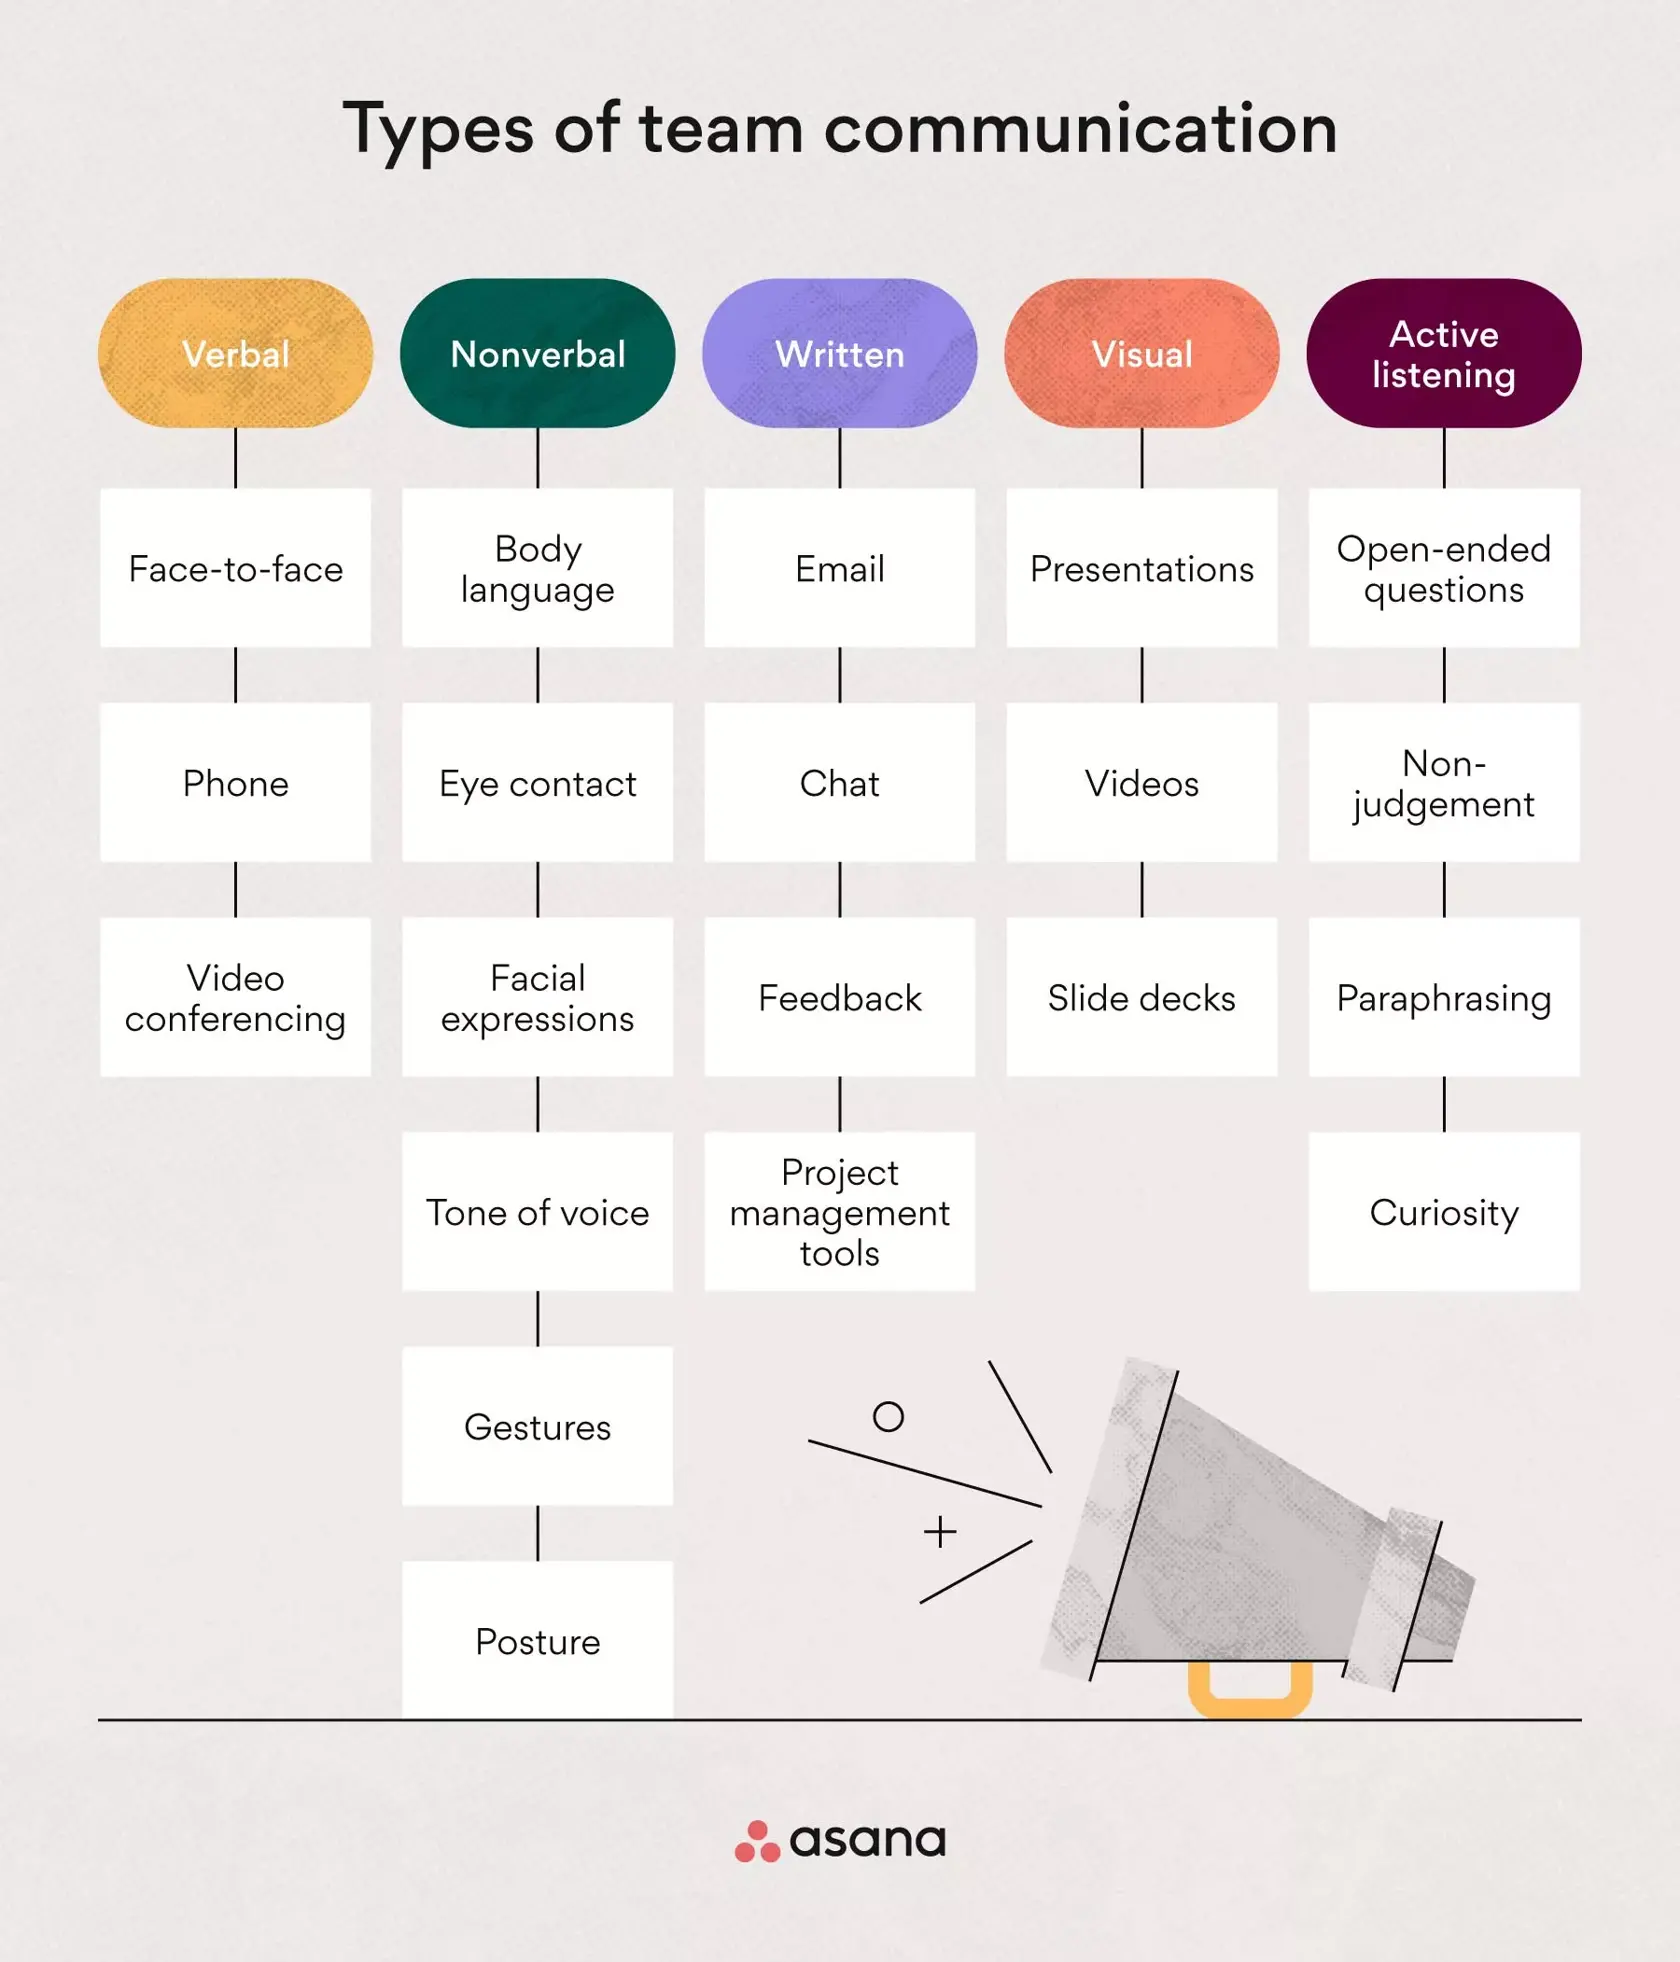 Types of team communication